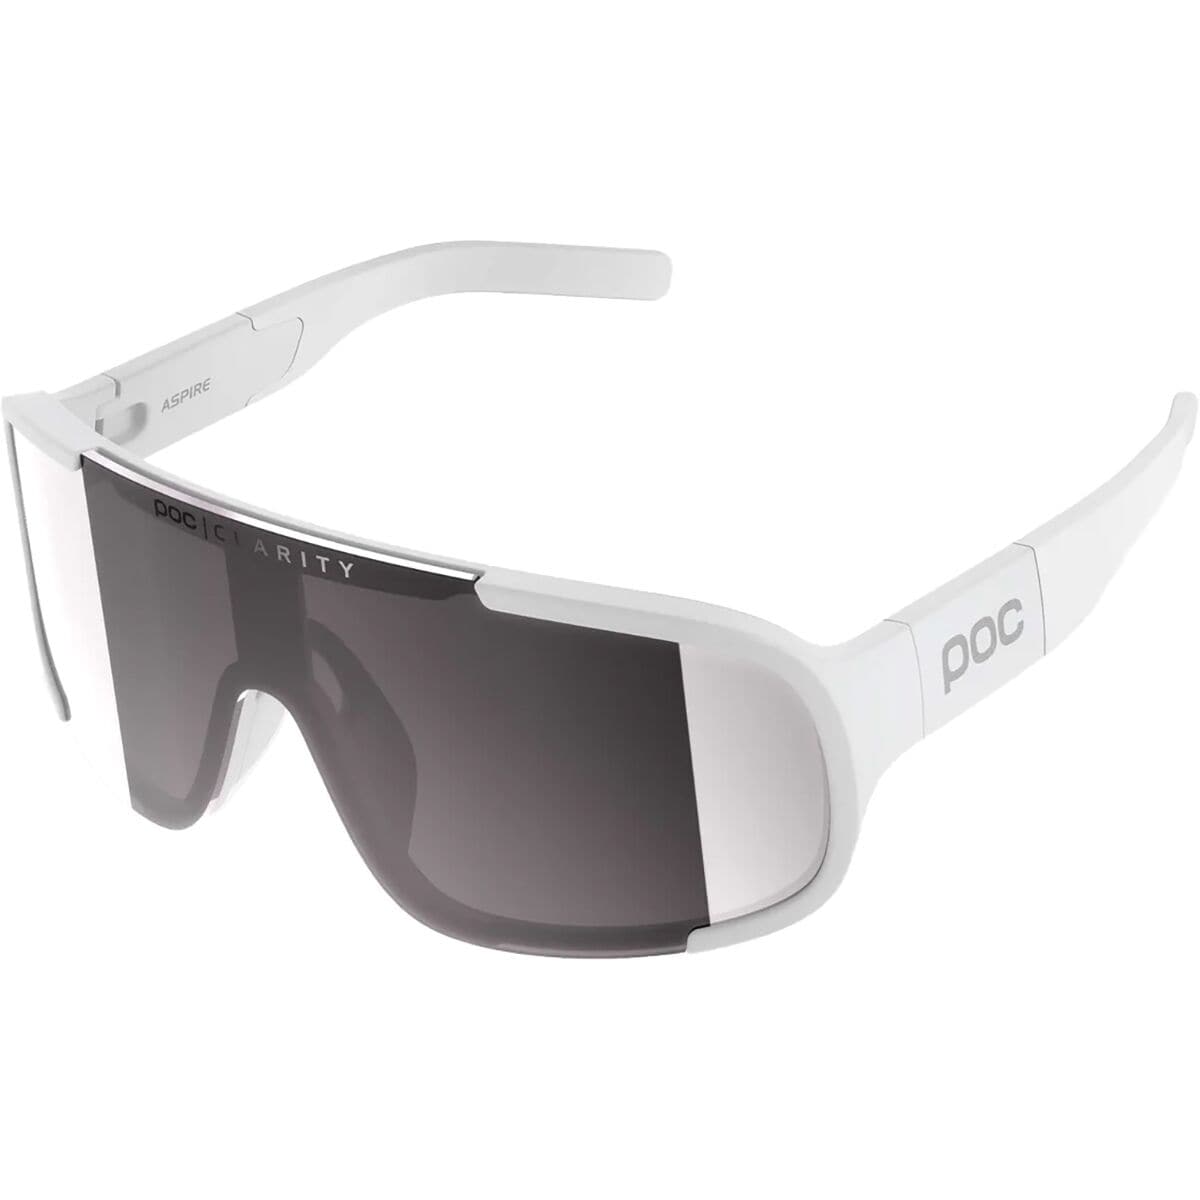 Солнцезащитные очки aspire Poc, цвет hydrogen white/clarity road/sunny silver